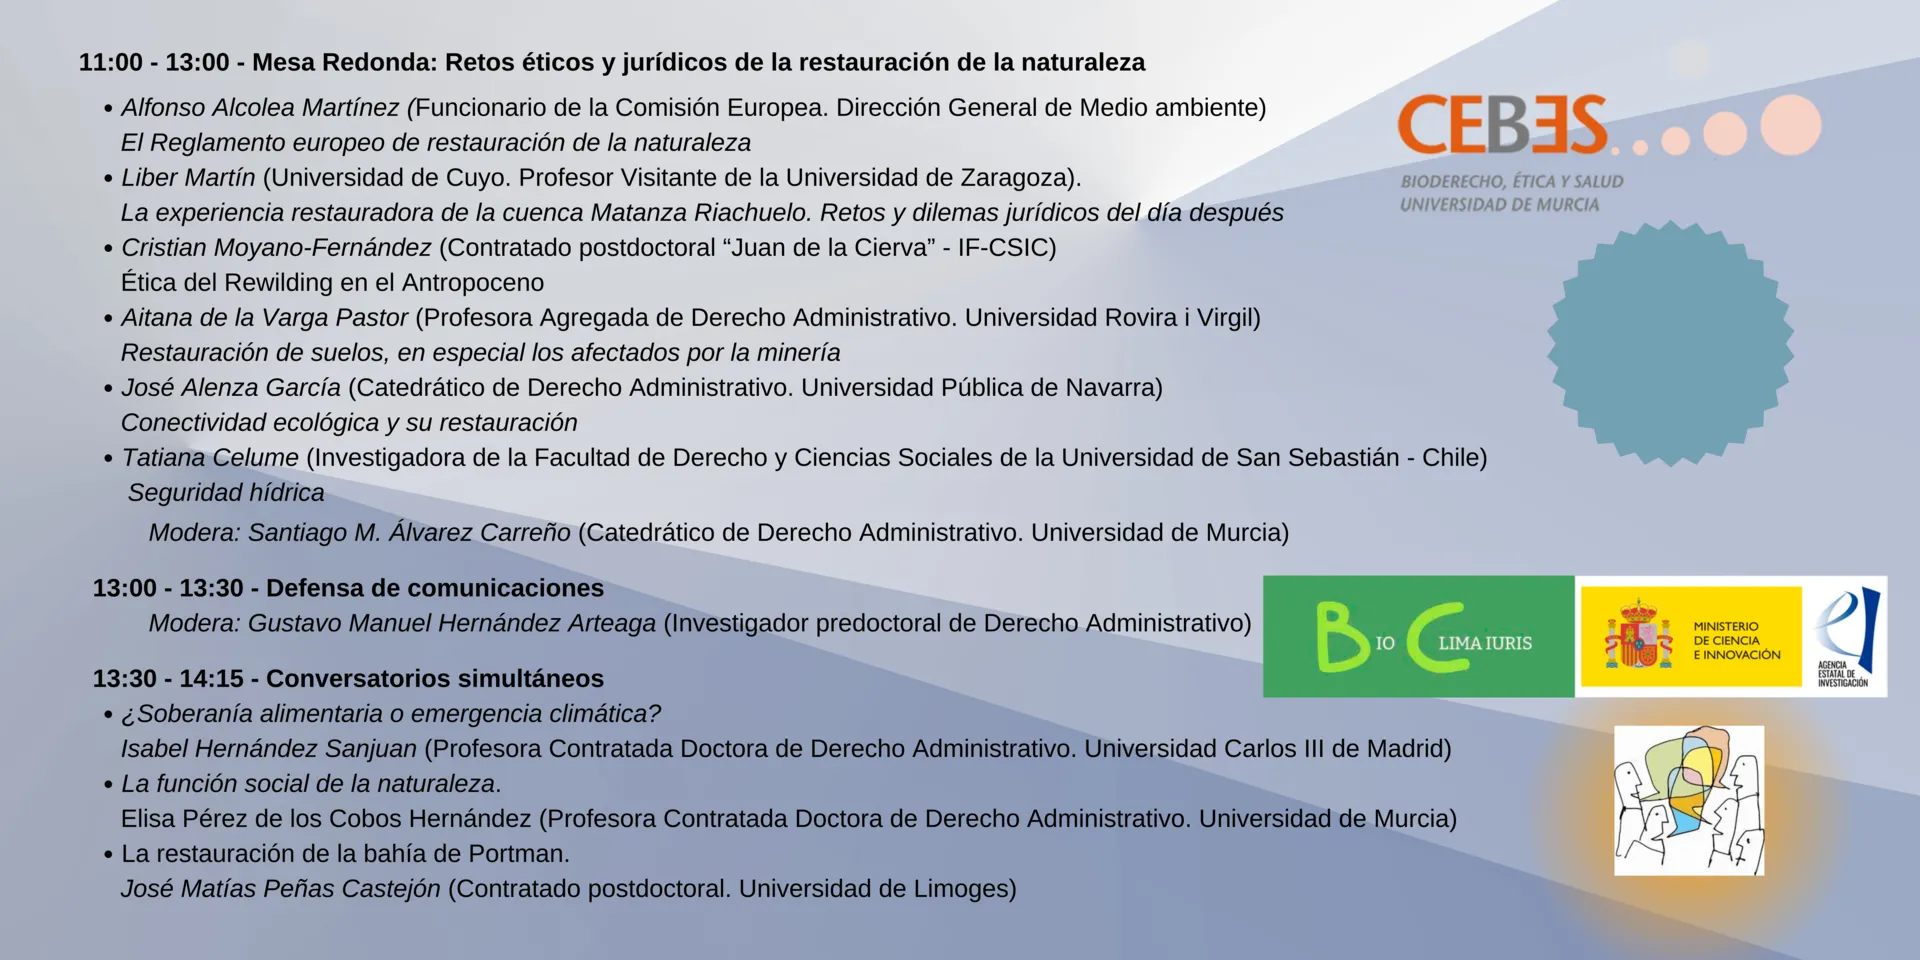 VIII Congreso Internacional de Bioderecho - Programa